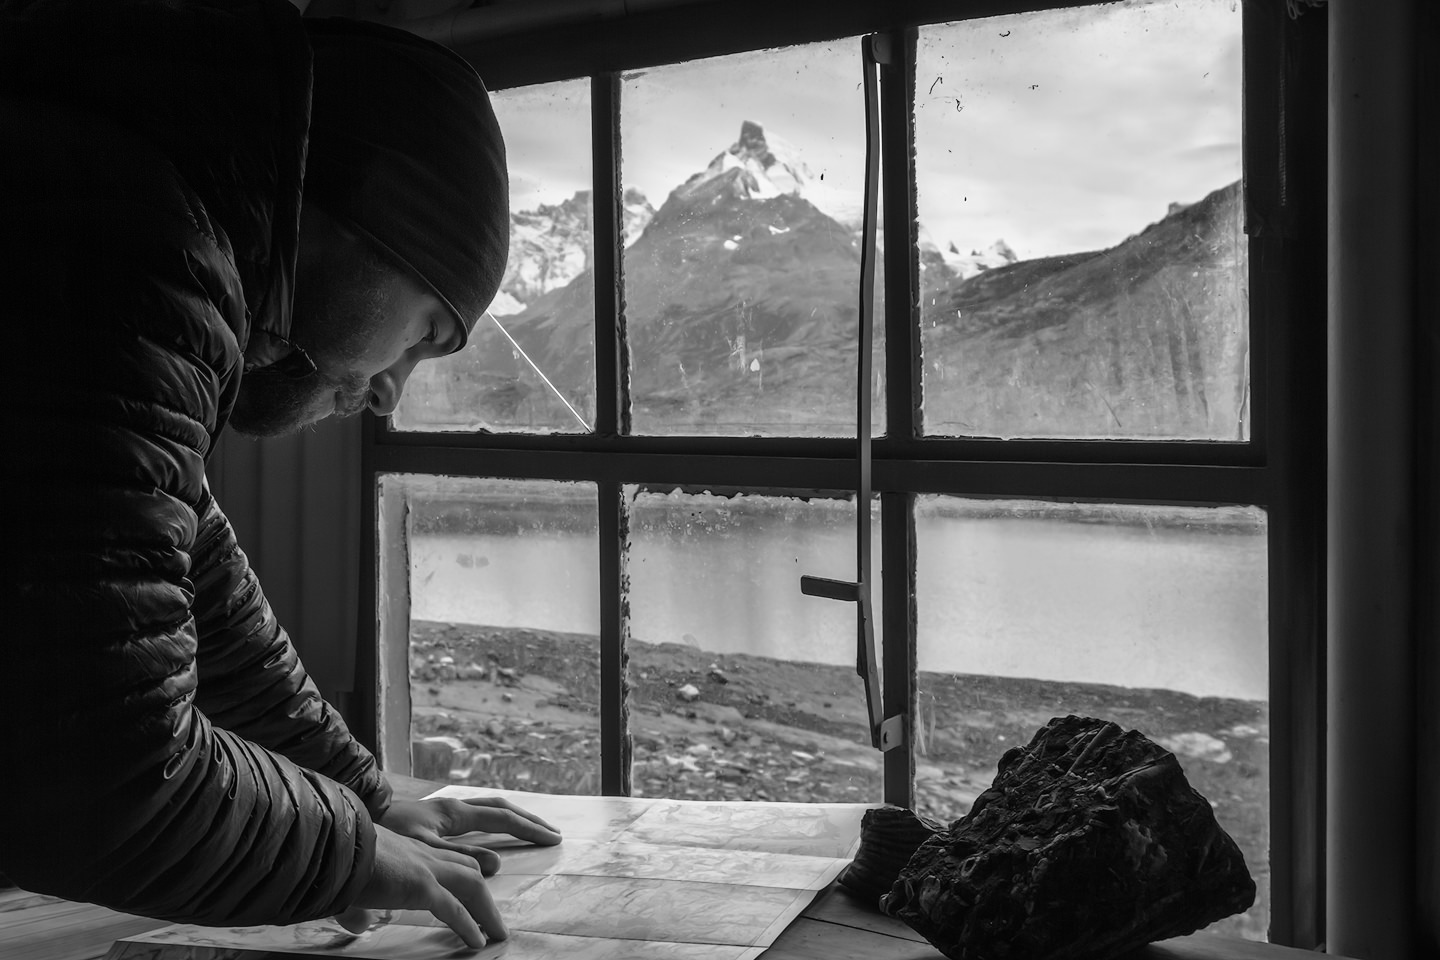 Joerg Bonner looking at a map inside a mountain shelter.